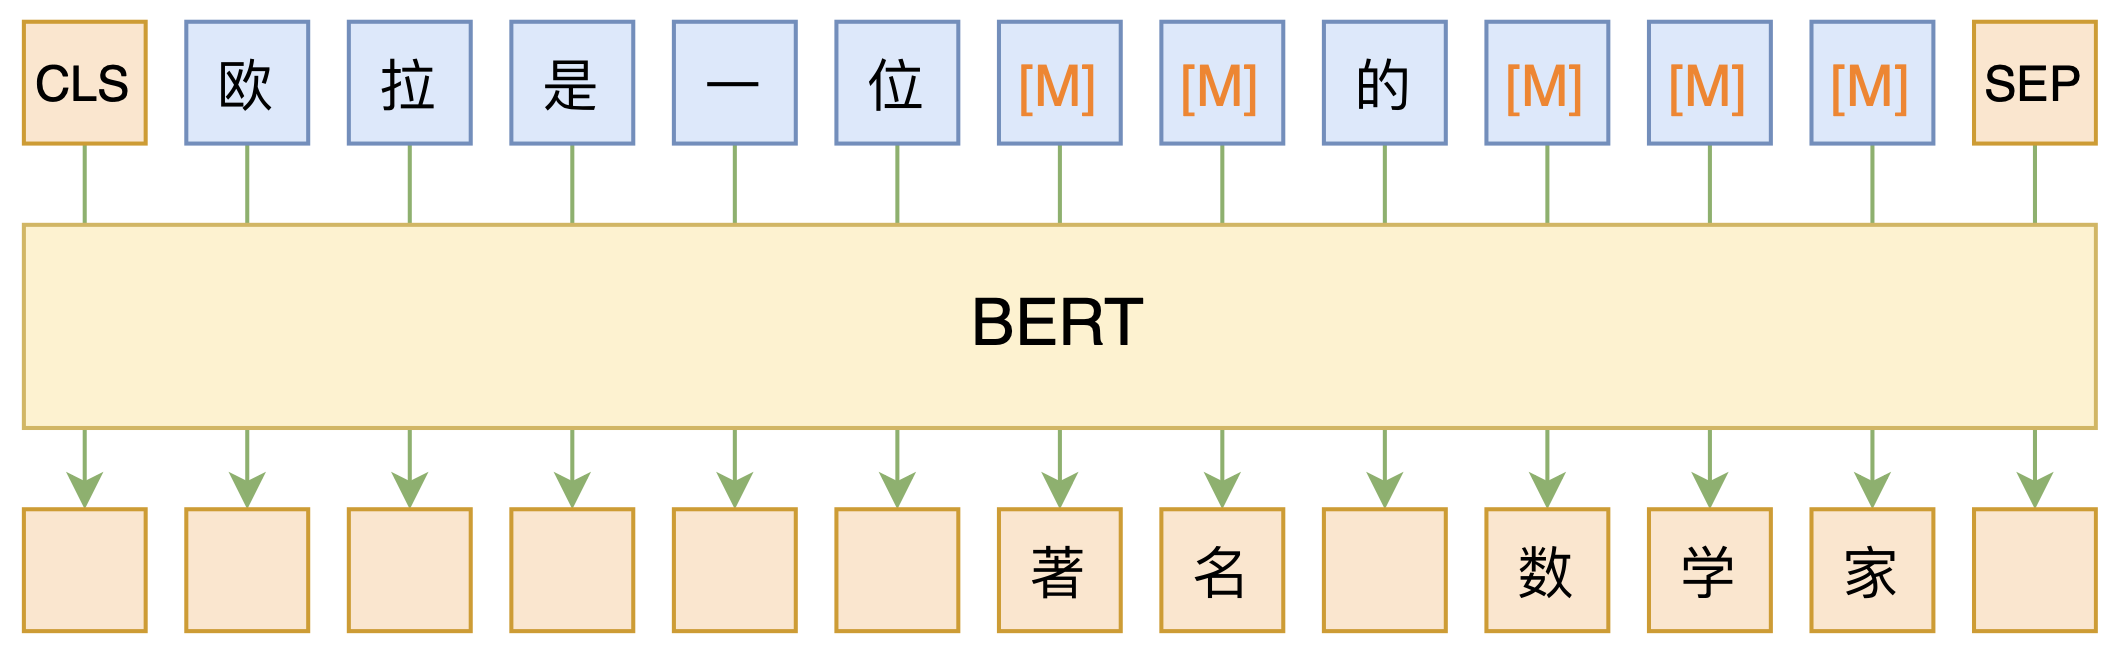 BERT的MLM模型简单示意图